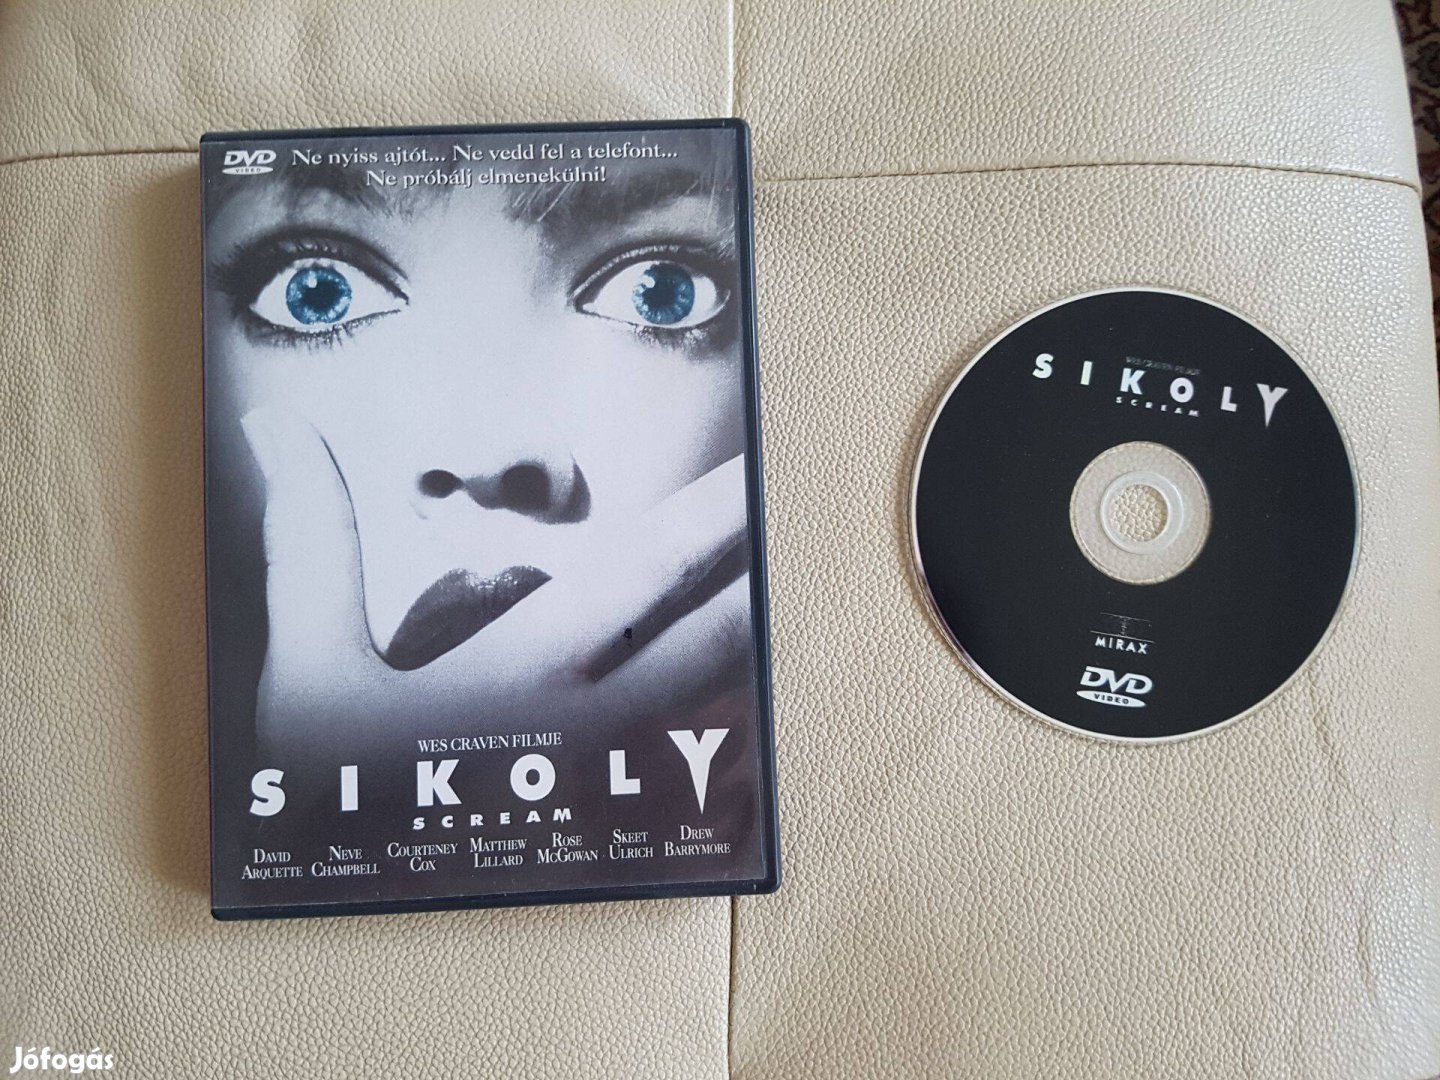 Sikoly Scream eredeti DVD film Programfüzettel